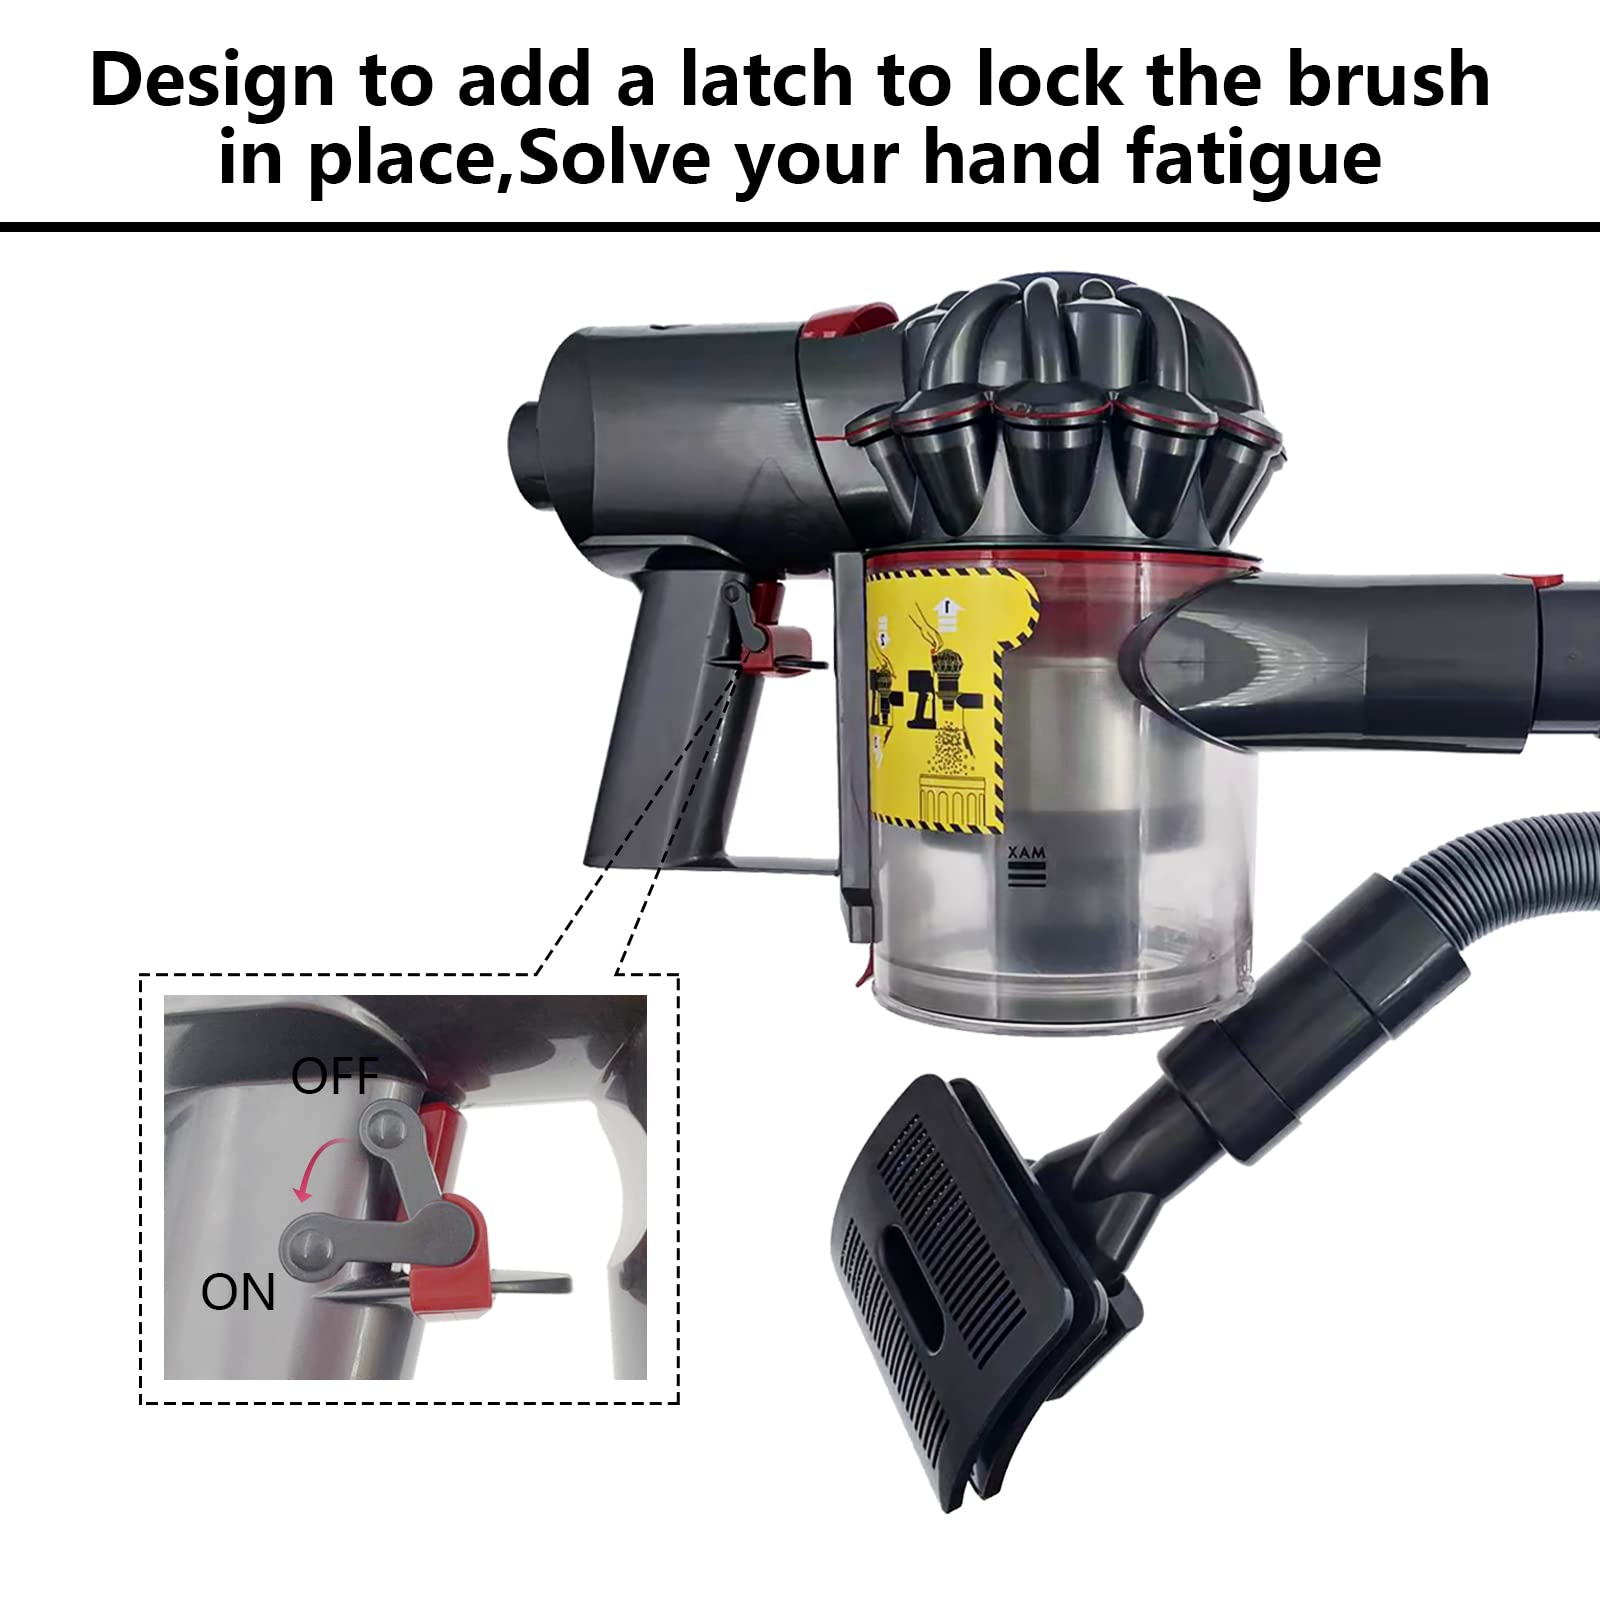 TPDL Groom Tool for Dyson Pet dog Attachment Brush, Compatible with Dyson V15 V12 V11 V10 V8 V7 DC62 DC65 Vacuum Cleaners, with Extended Vacuum Hose & Trigger Lock